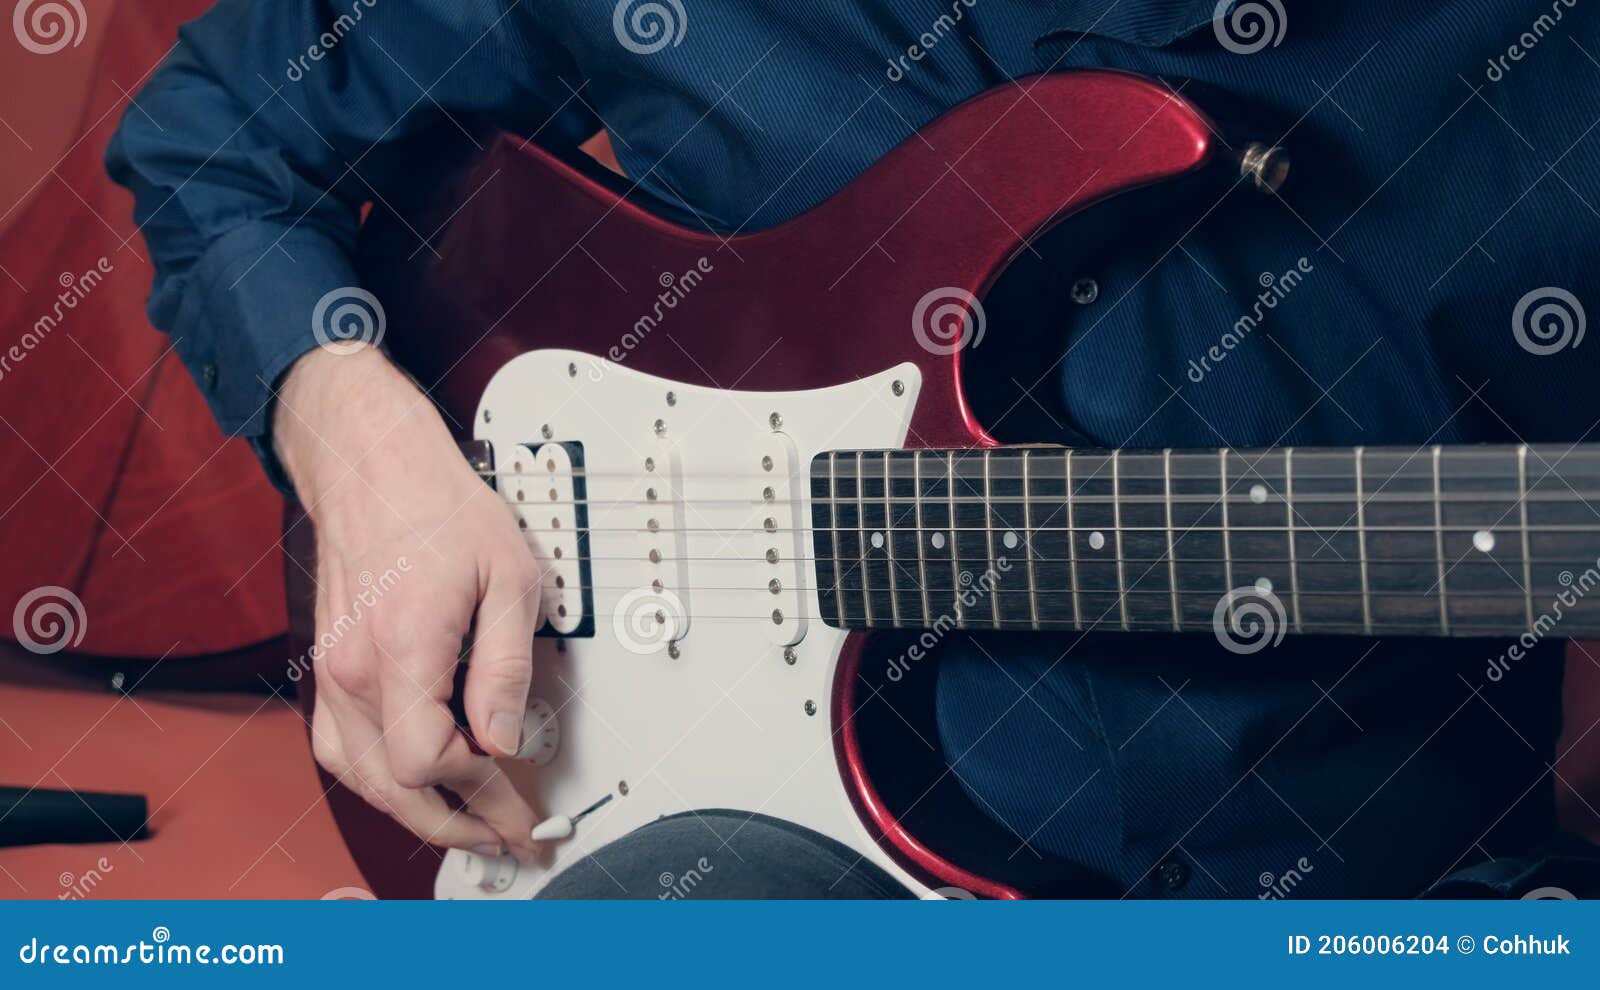 caucasian man in a blue shirt plays an red electric guitar